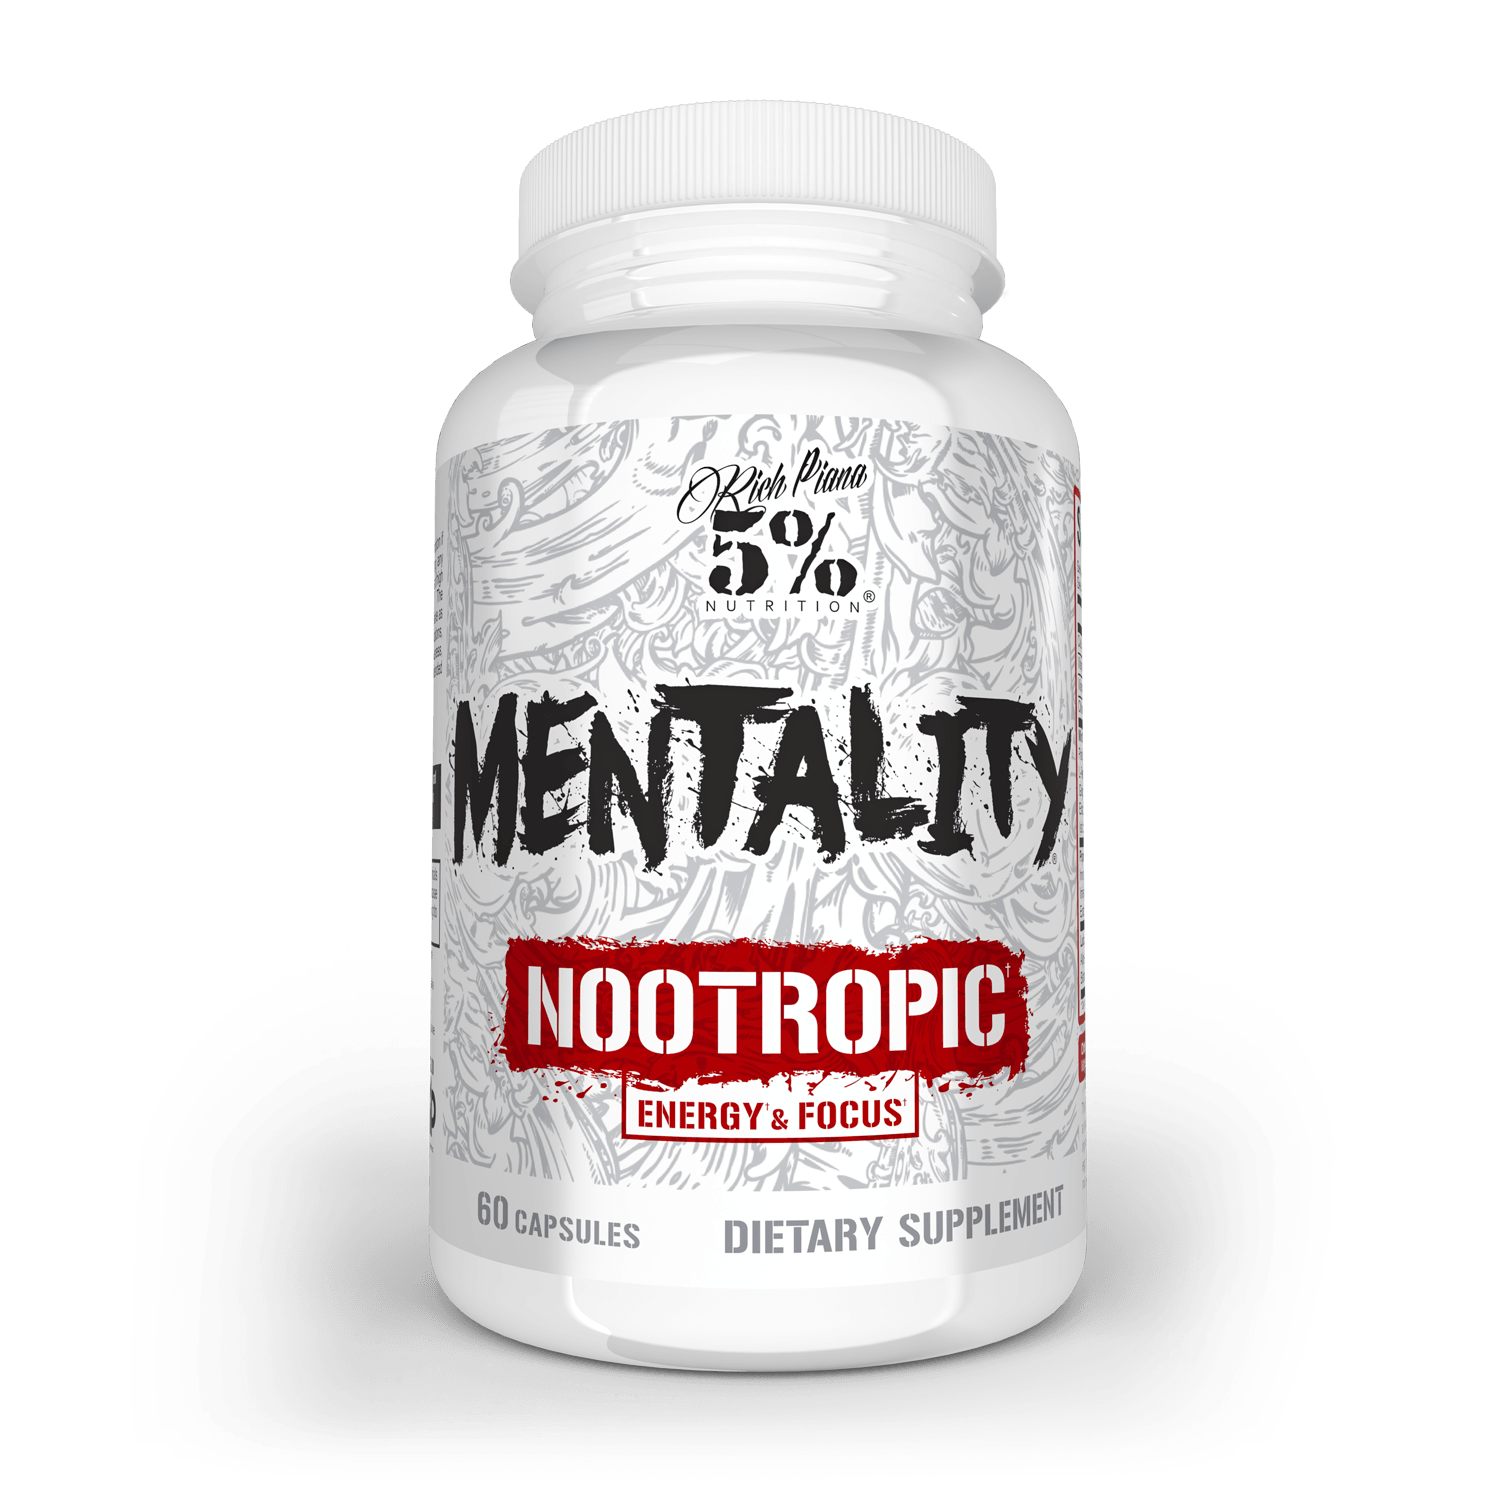 Mentality Nootropic Blend: Legendary Series - 5% Nutrition